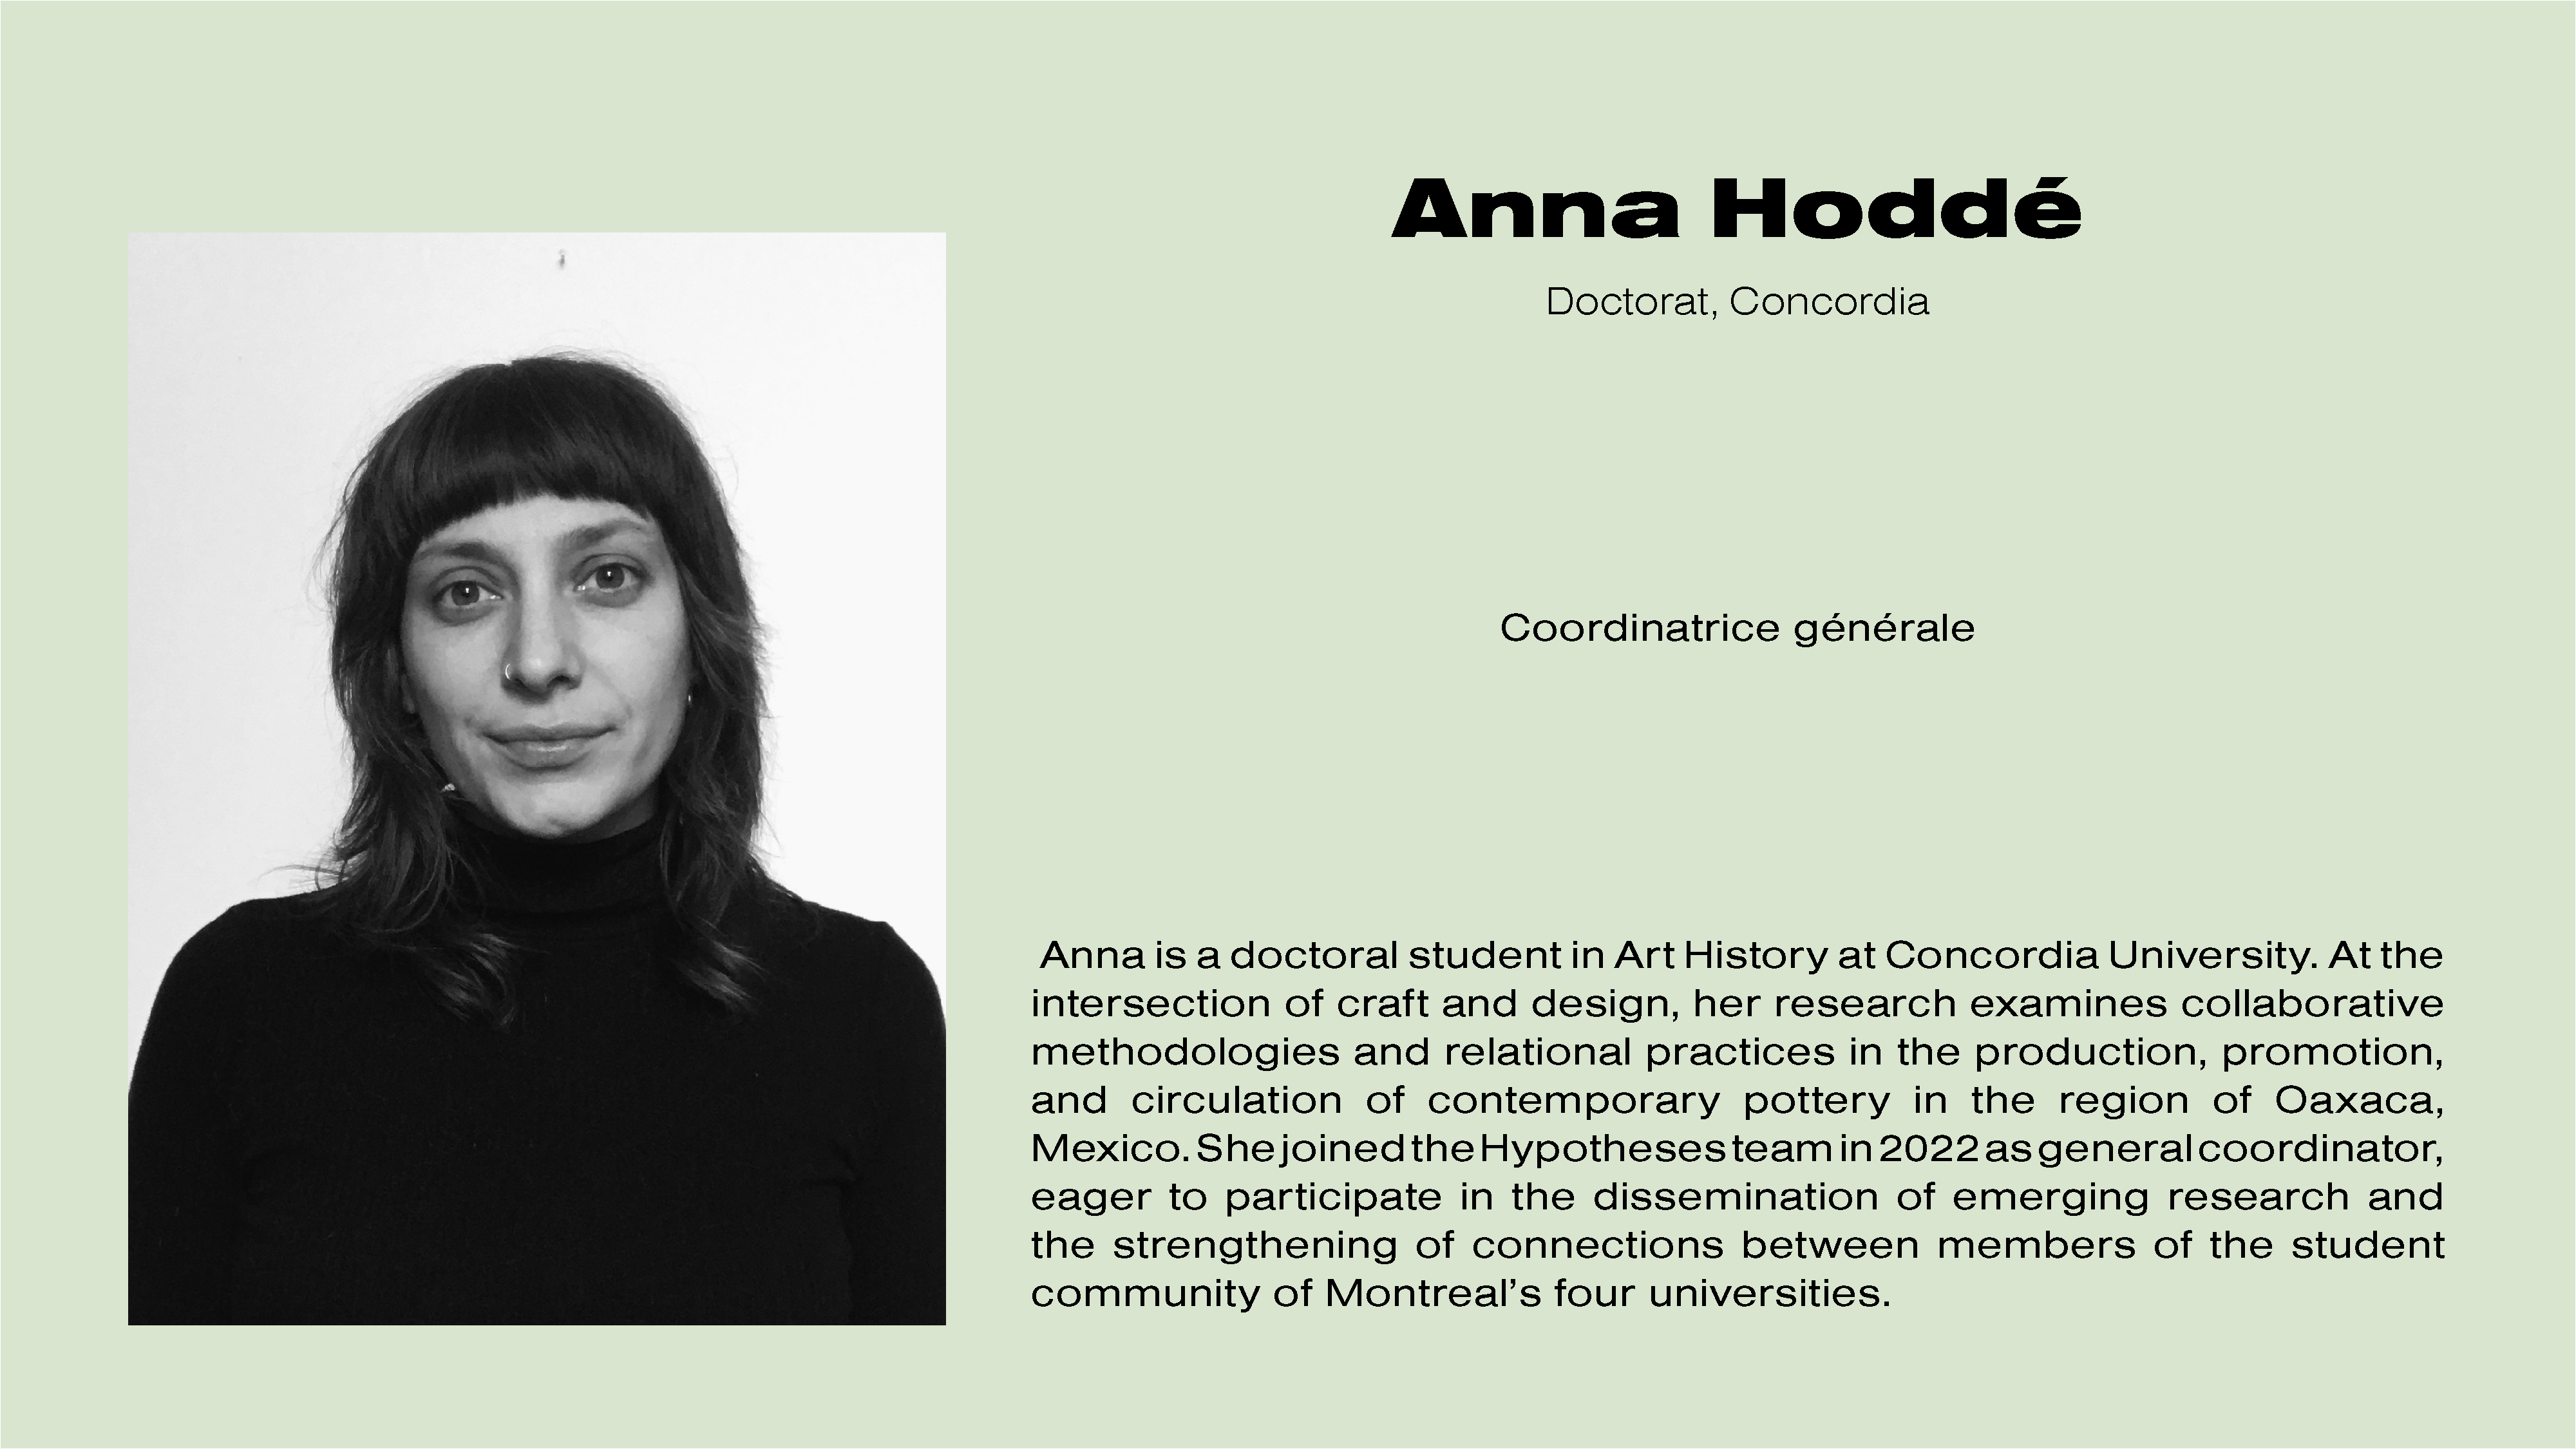 Anna Hoddée, coordinatrice